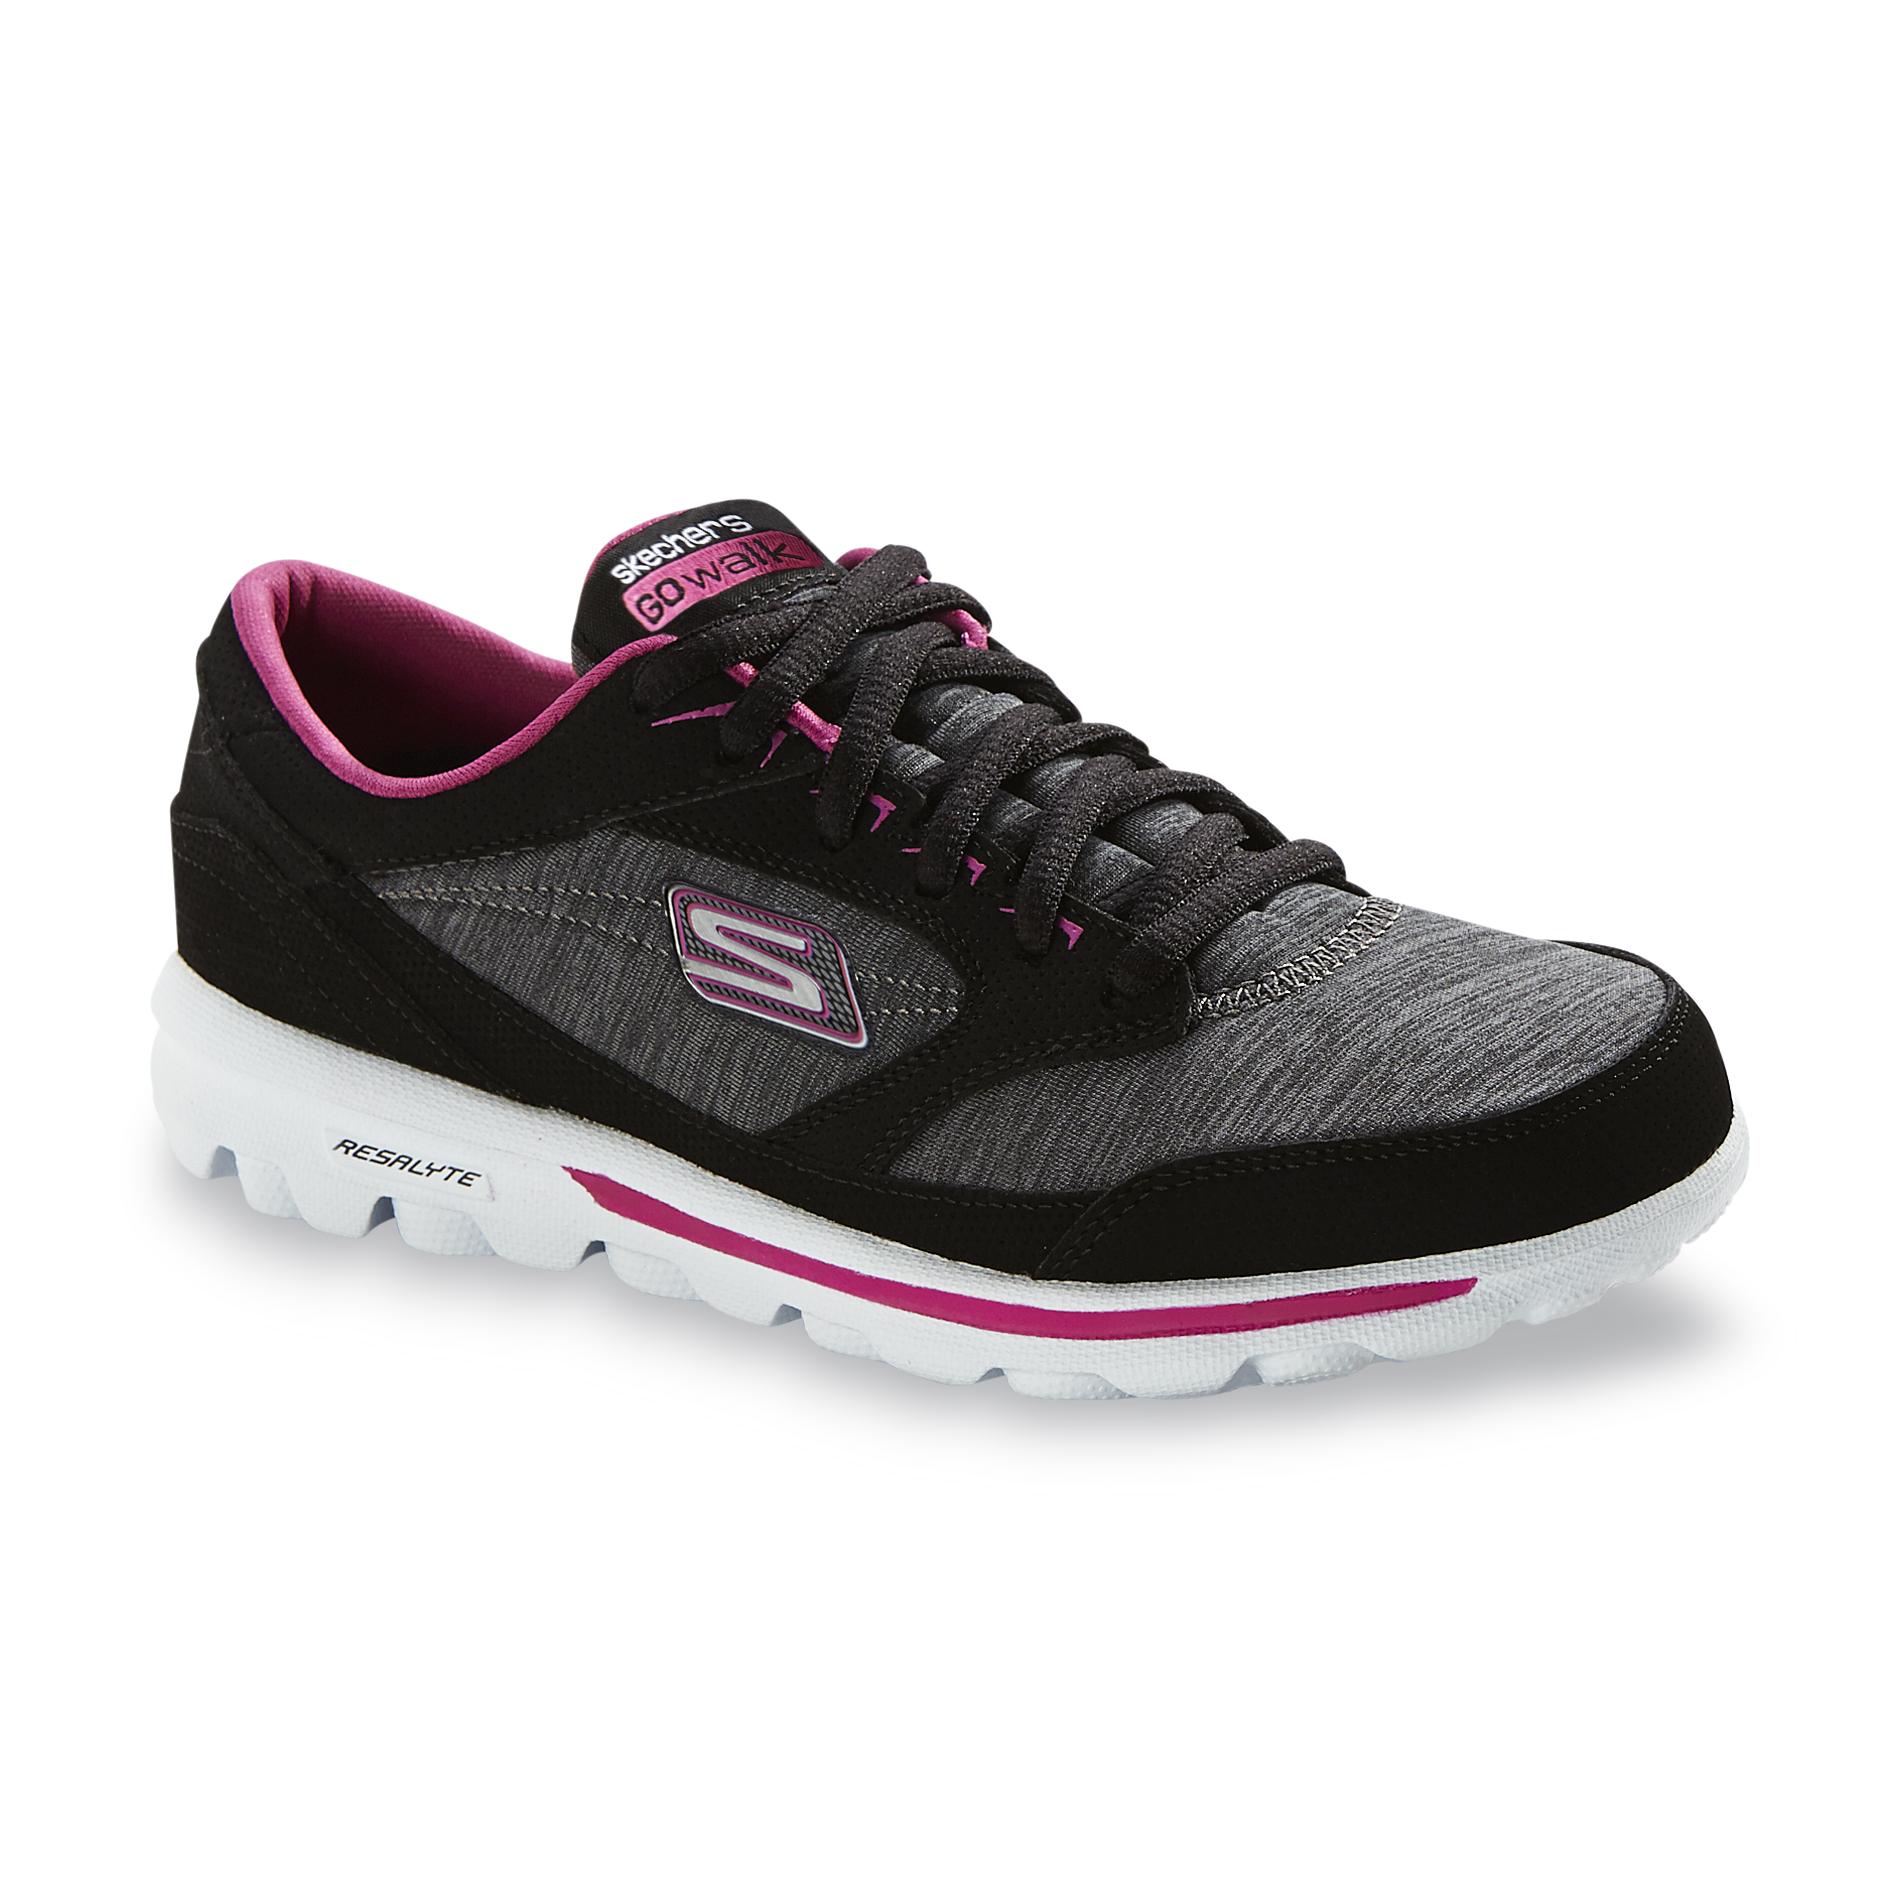 Skechers Women's Godynamic Casual Athletic Shoe - Black/Pink